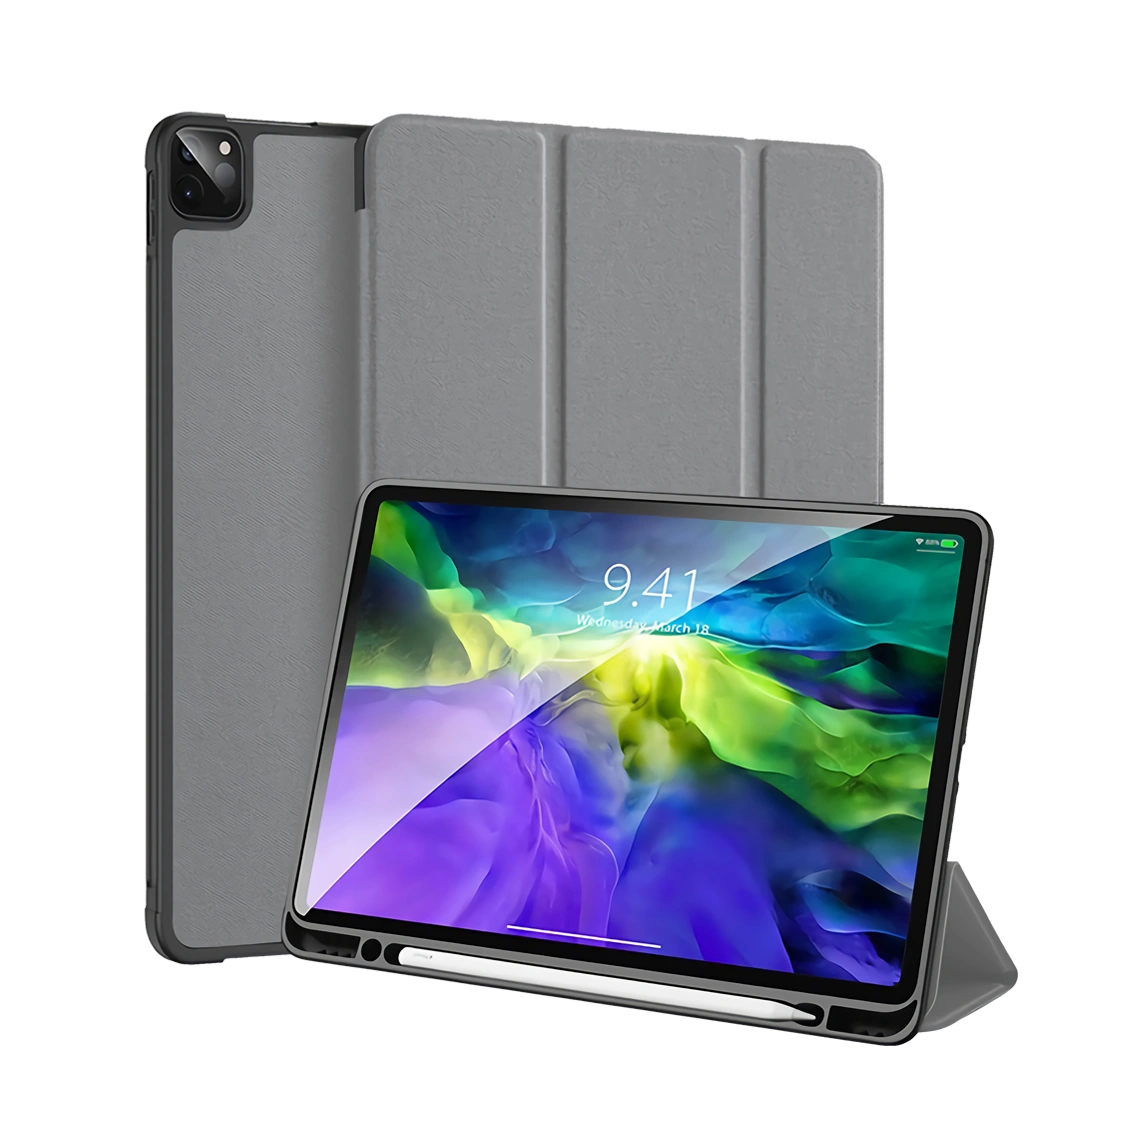 Jinya Defender Case for iPad Pro 12.9-inch